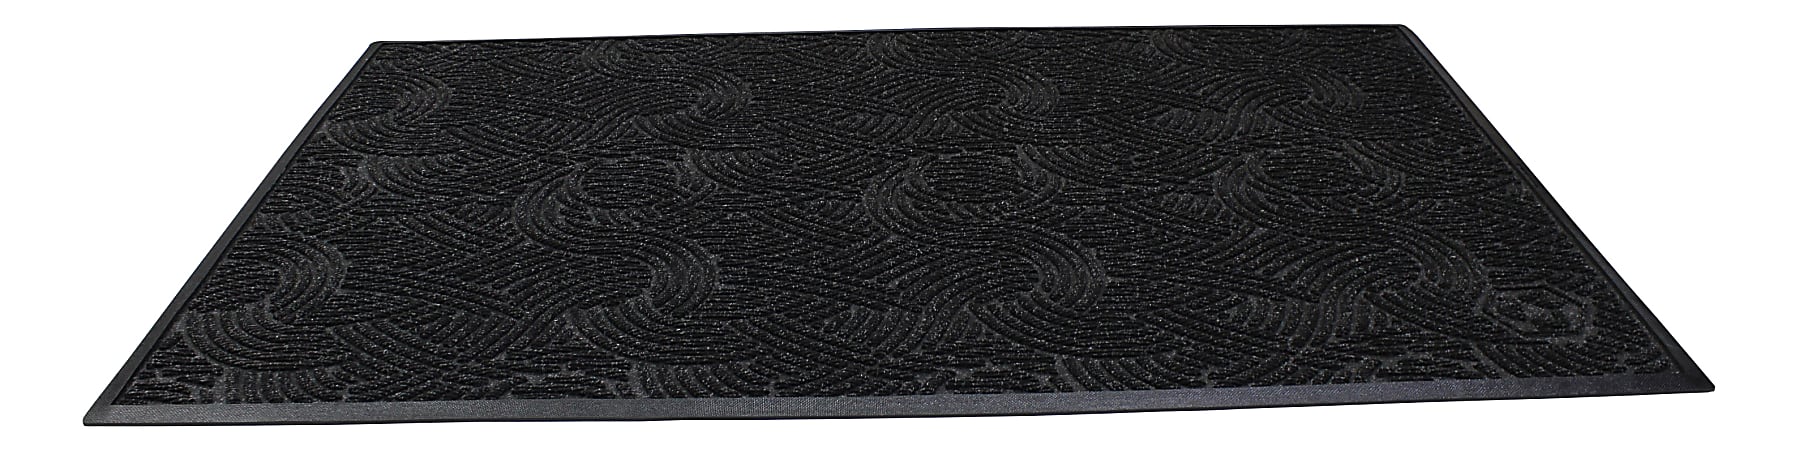 Waterhog Plus Swirl Floor Mat, 36 x 48, Black Smoke